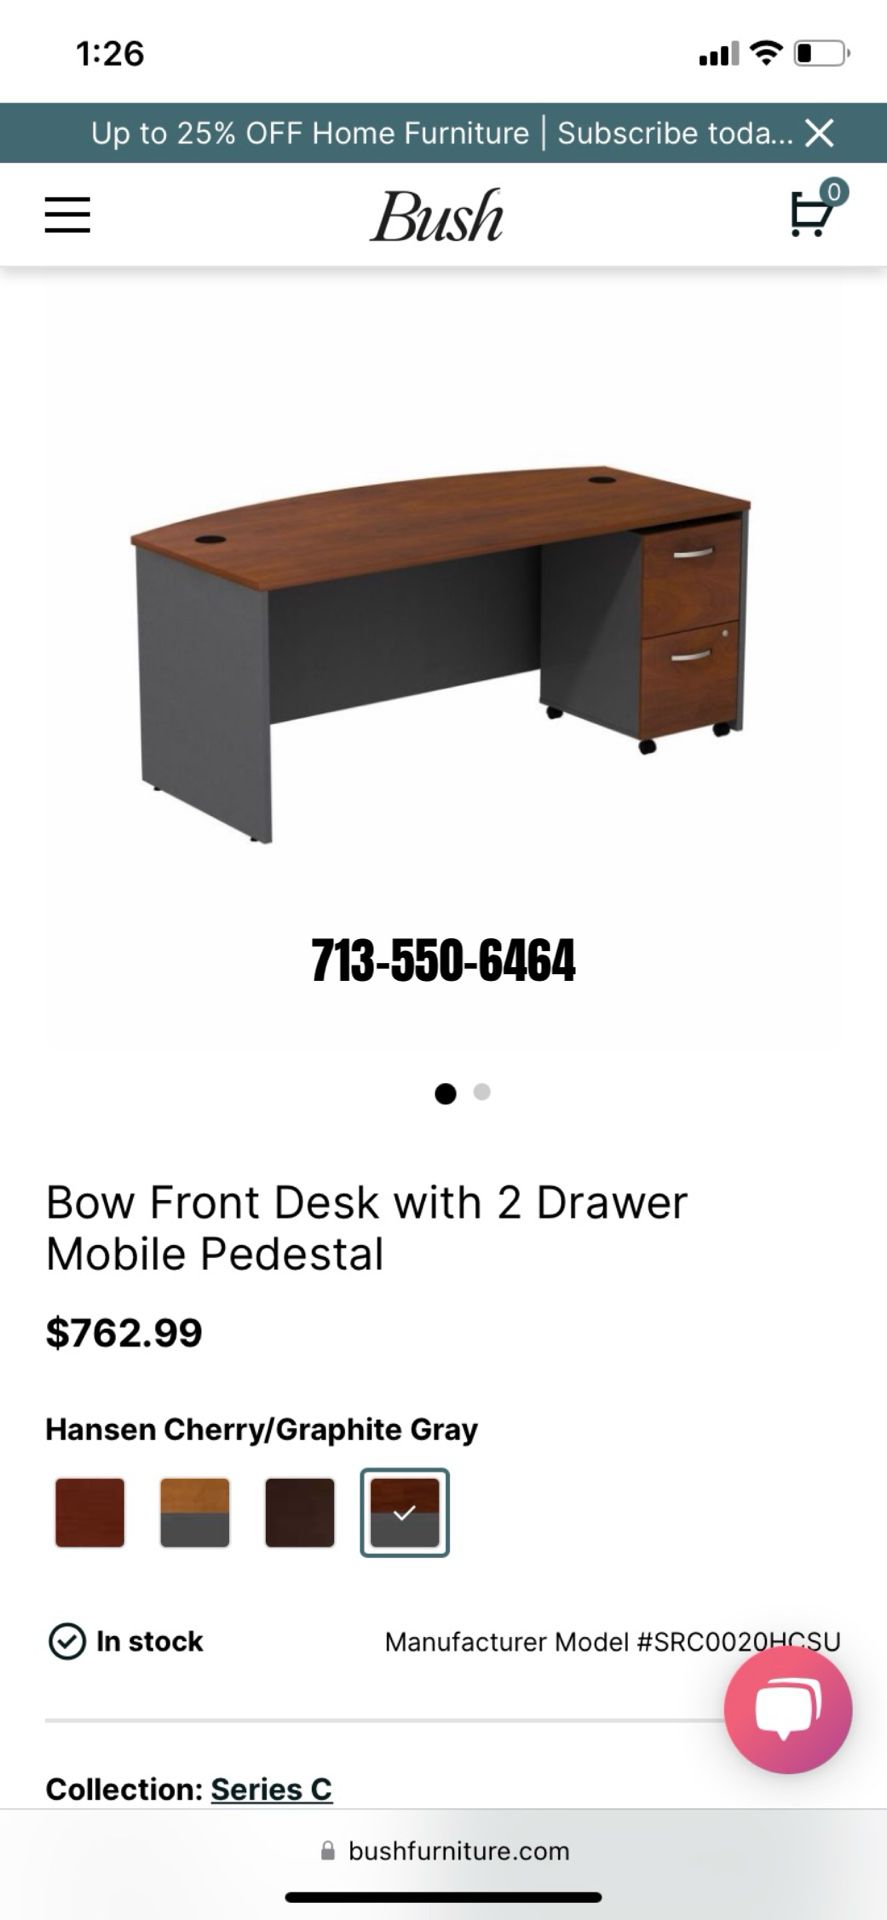 4 Piece bush Executive Desk Set